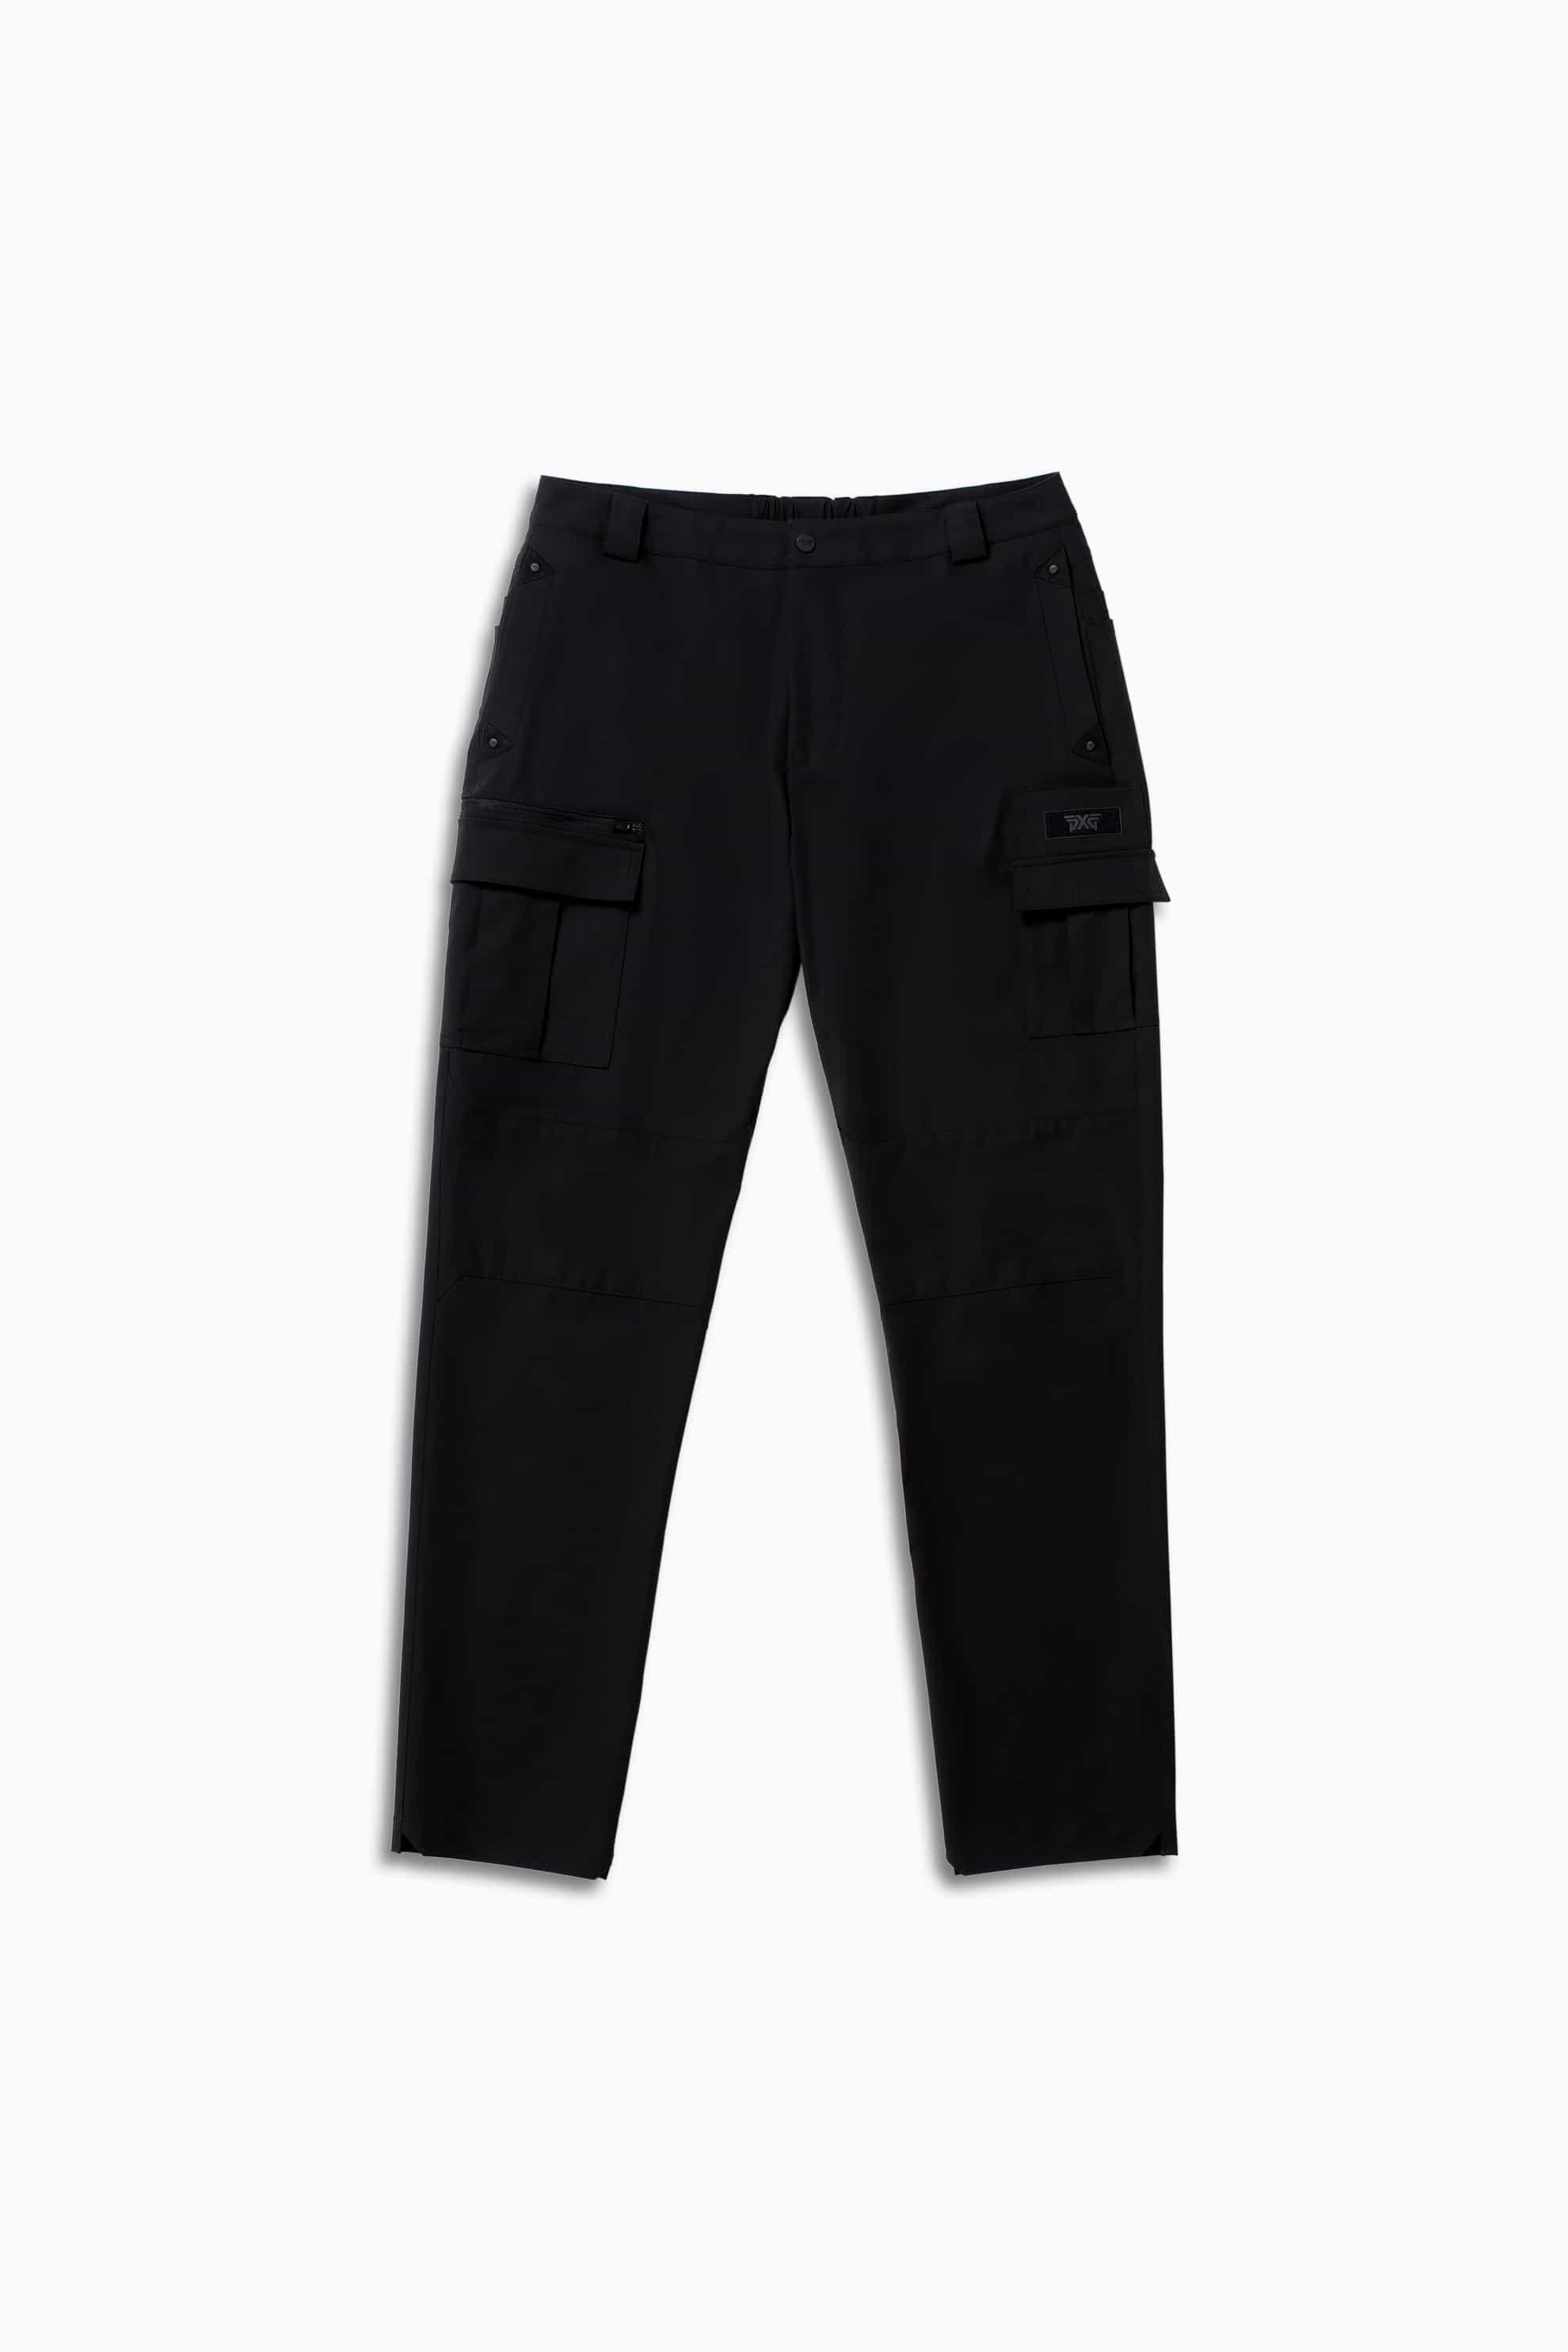 Shop Men's Golf Pants and Shorts | PXG JP